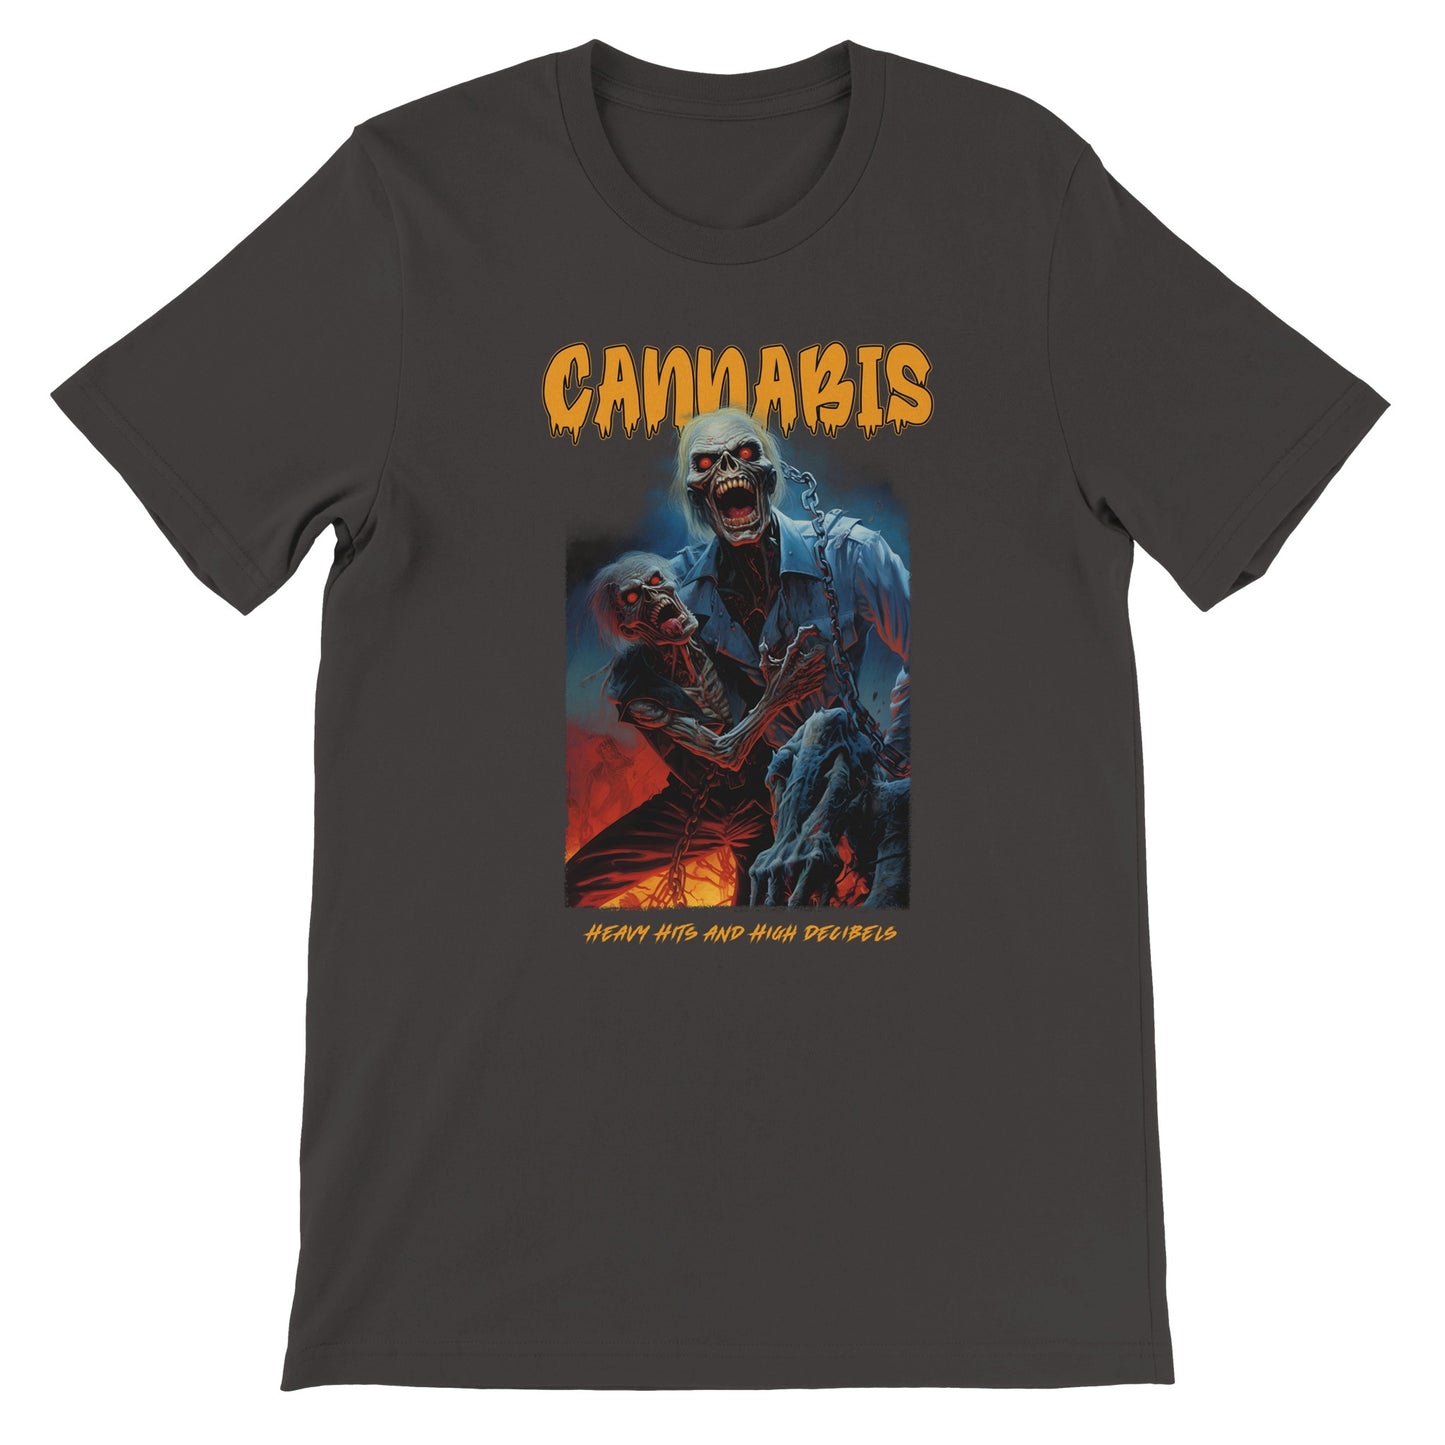 Metal Head Cannabis T-shirt dankweedtees